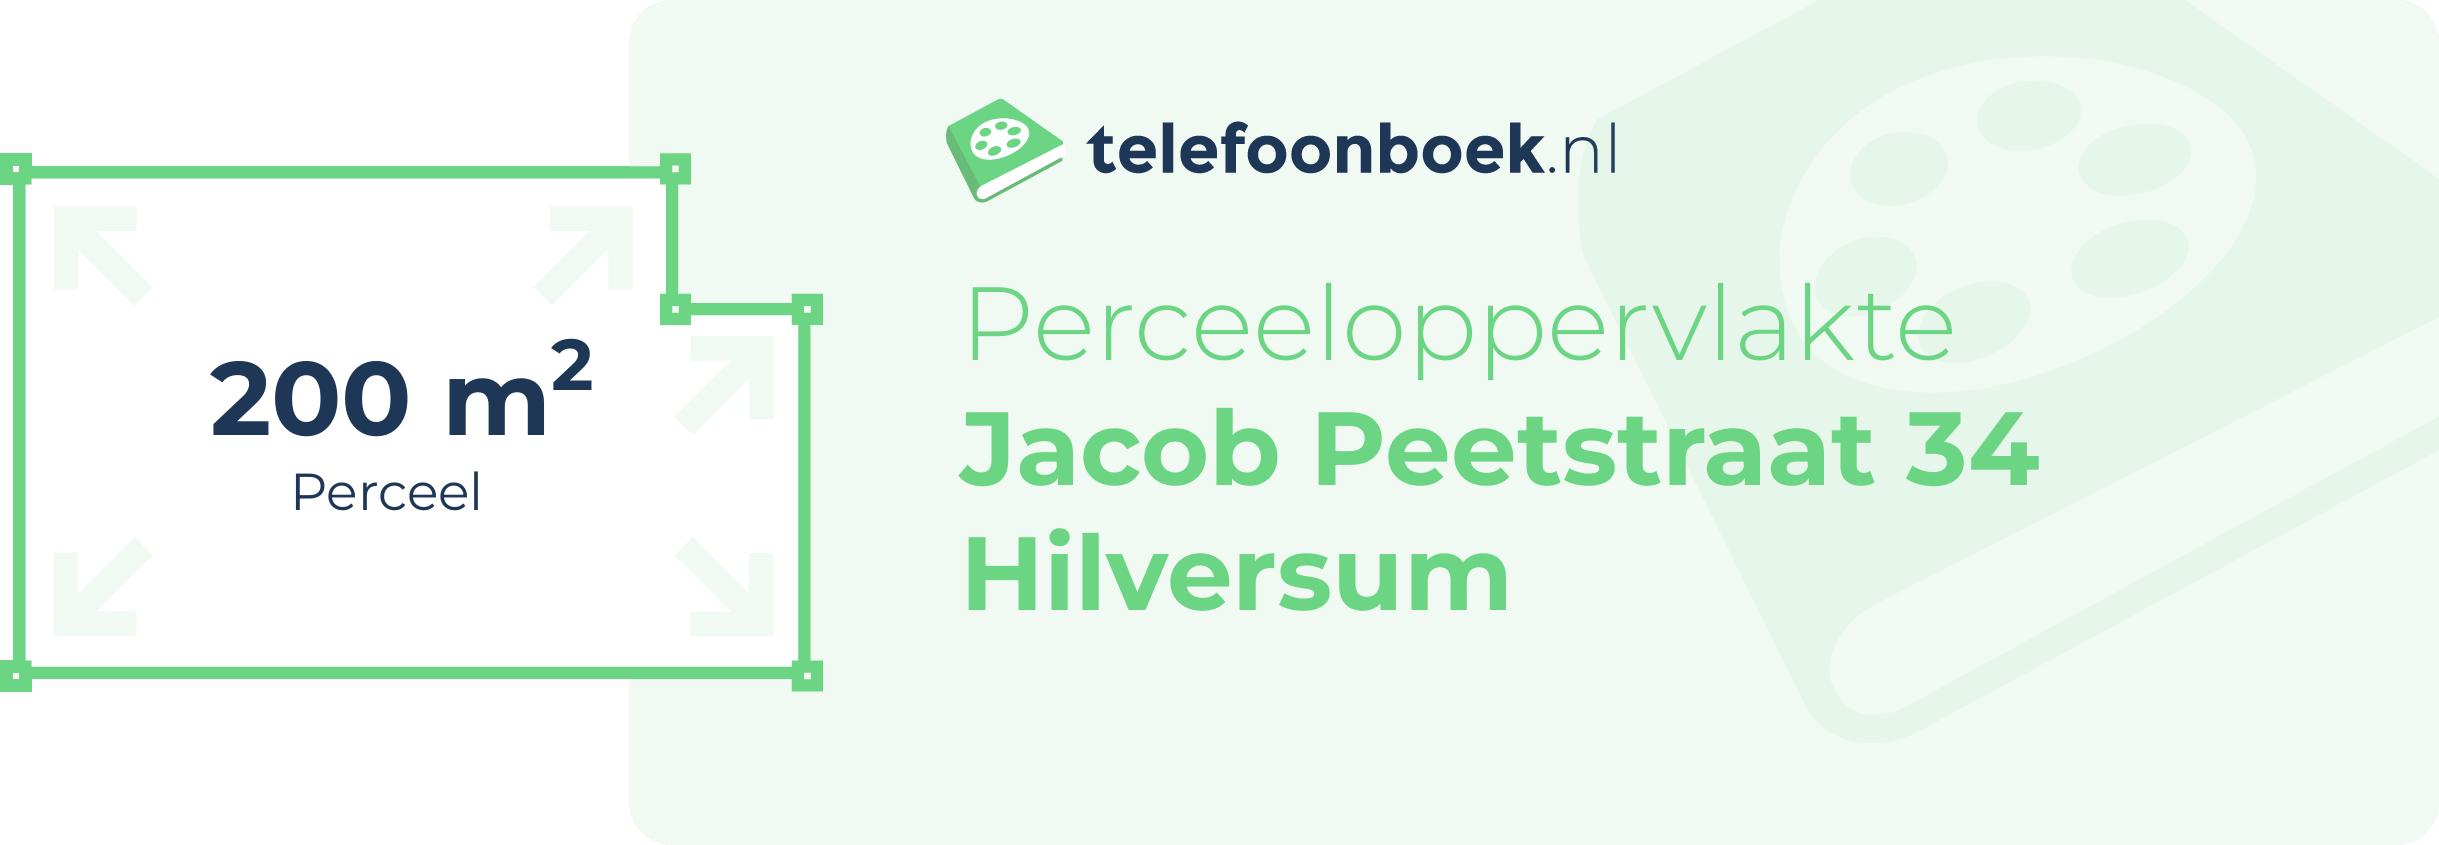 Perceeloppervlakte Jacob Peetstraat 34 Hilversum